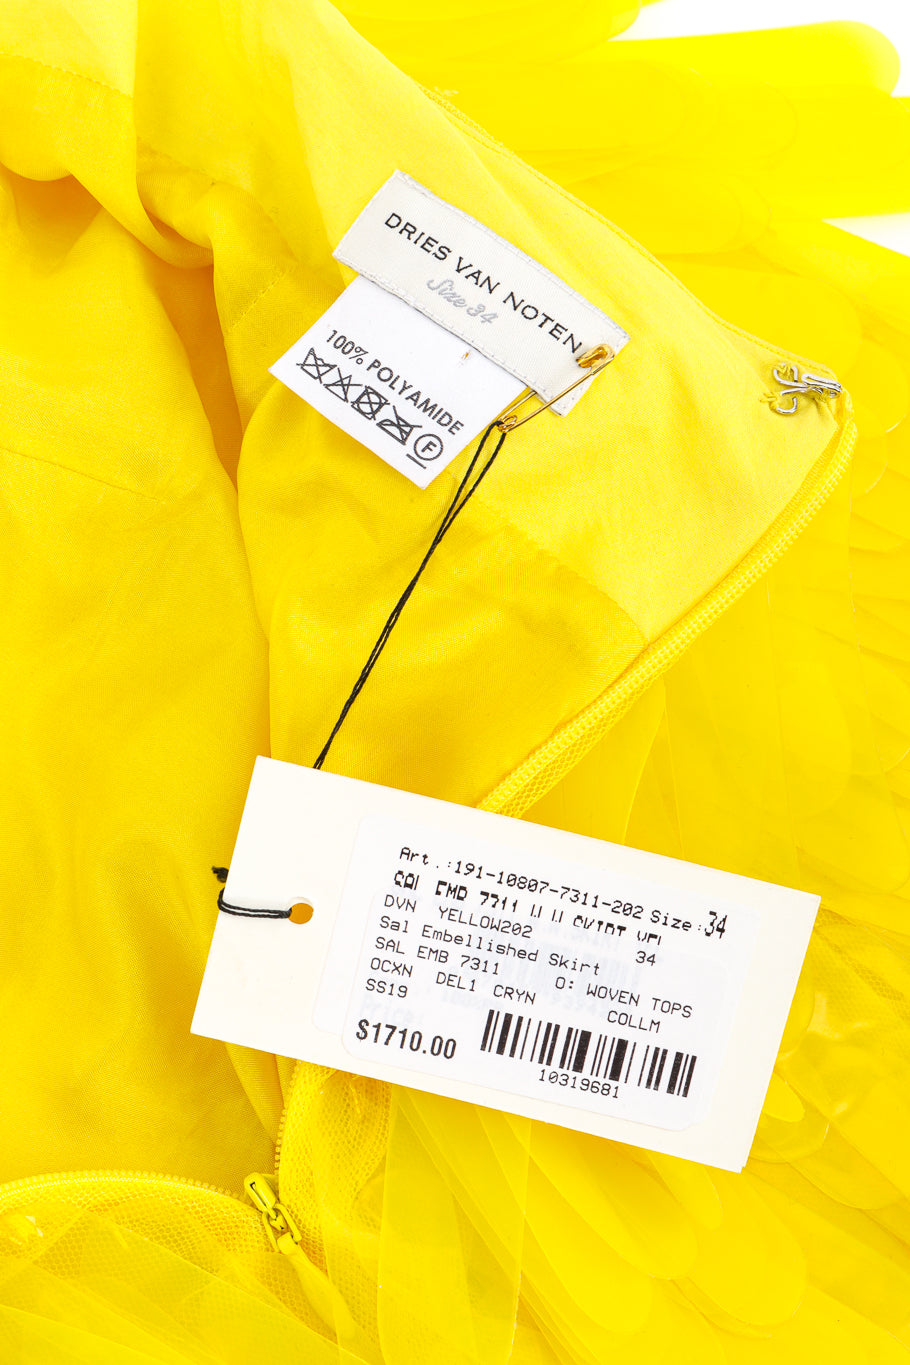 Dries Van Noten 2019 S/S Paillette Midi Skirt signature label and hang tag details @recess la